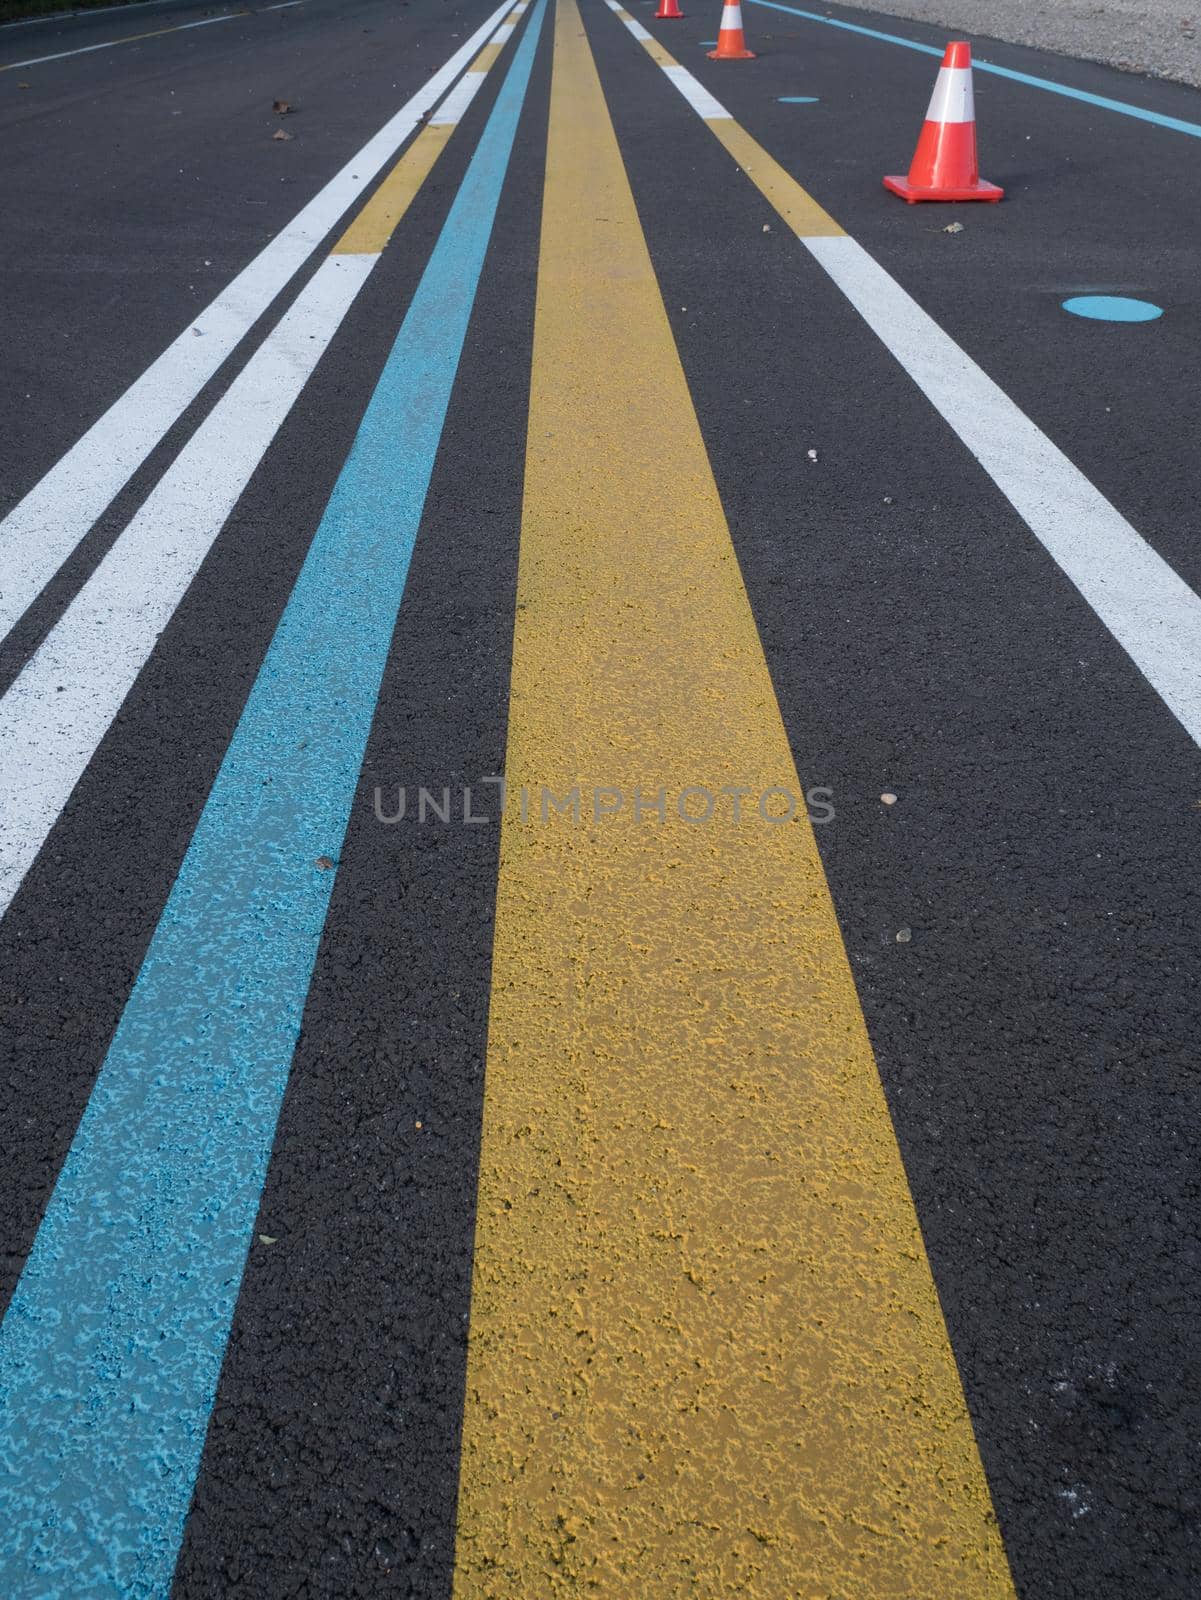 Various lines painted on asphalt by zebra